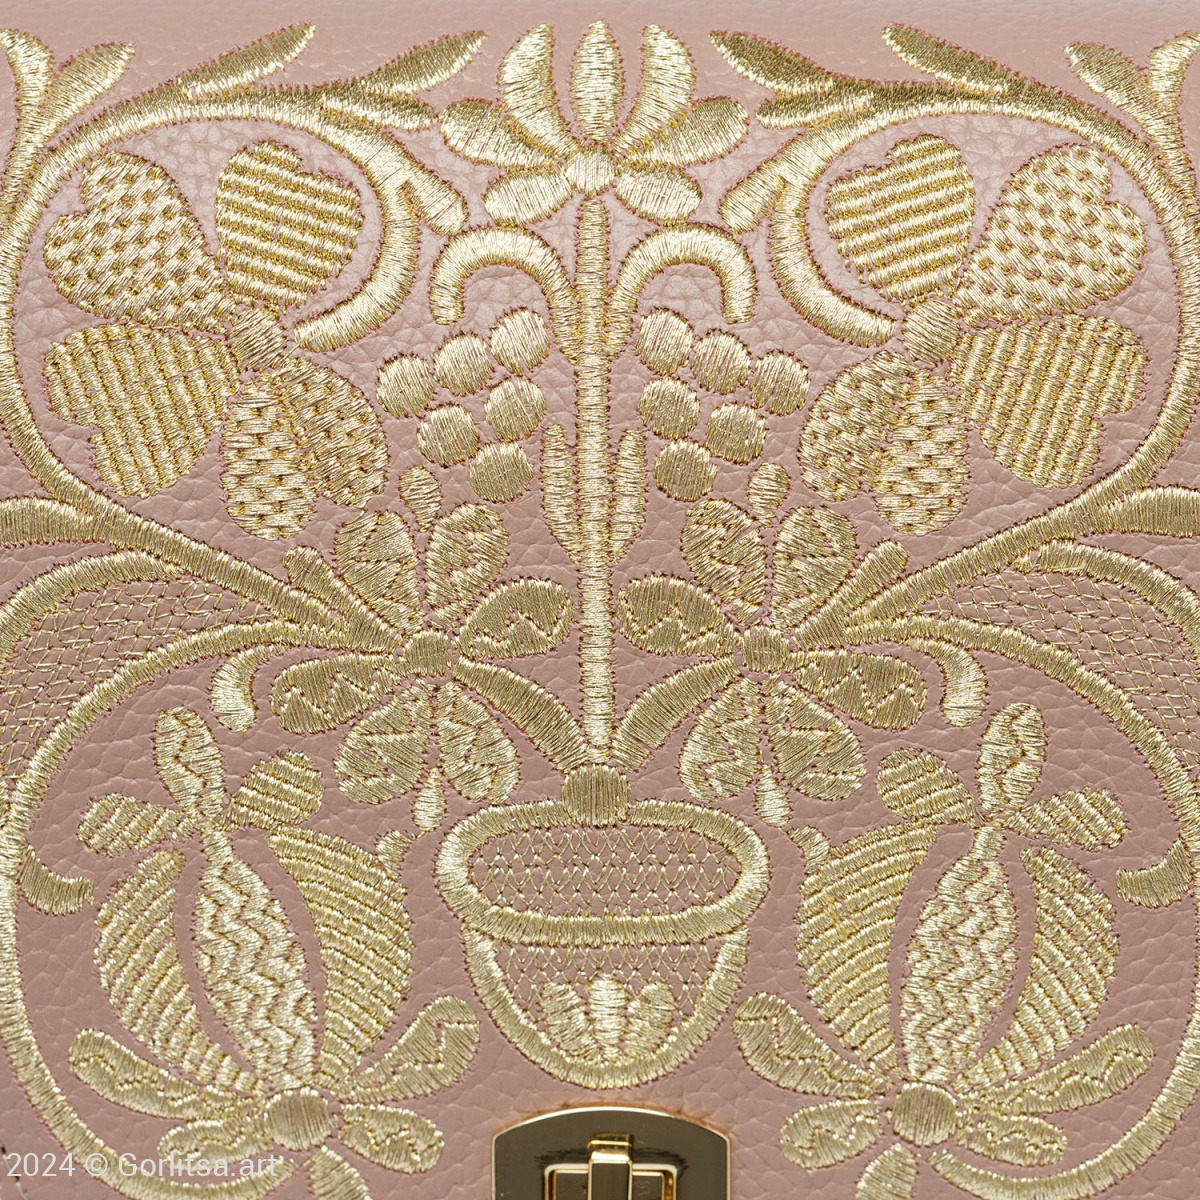 Сумка кожаная «Традиции» м.1189, пудровый / золото  нат. кожа Горлица.Арт фото 6